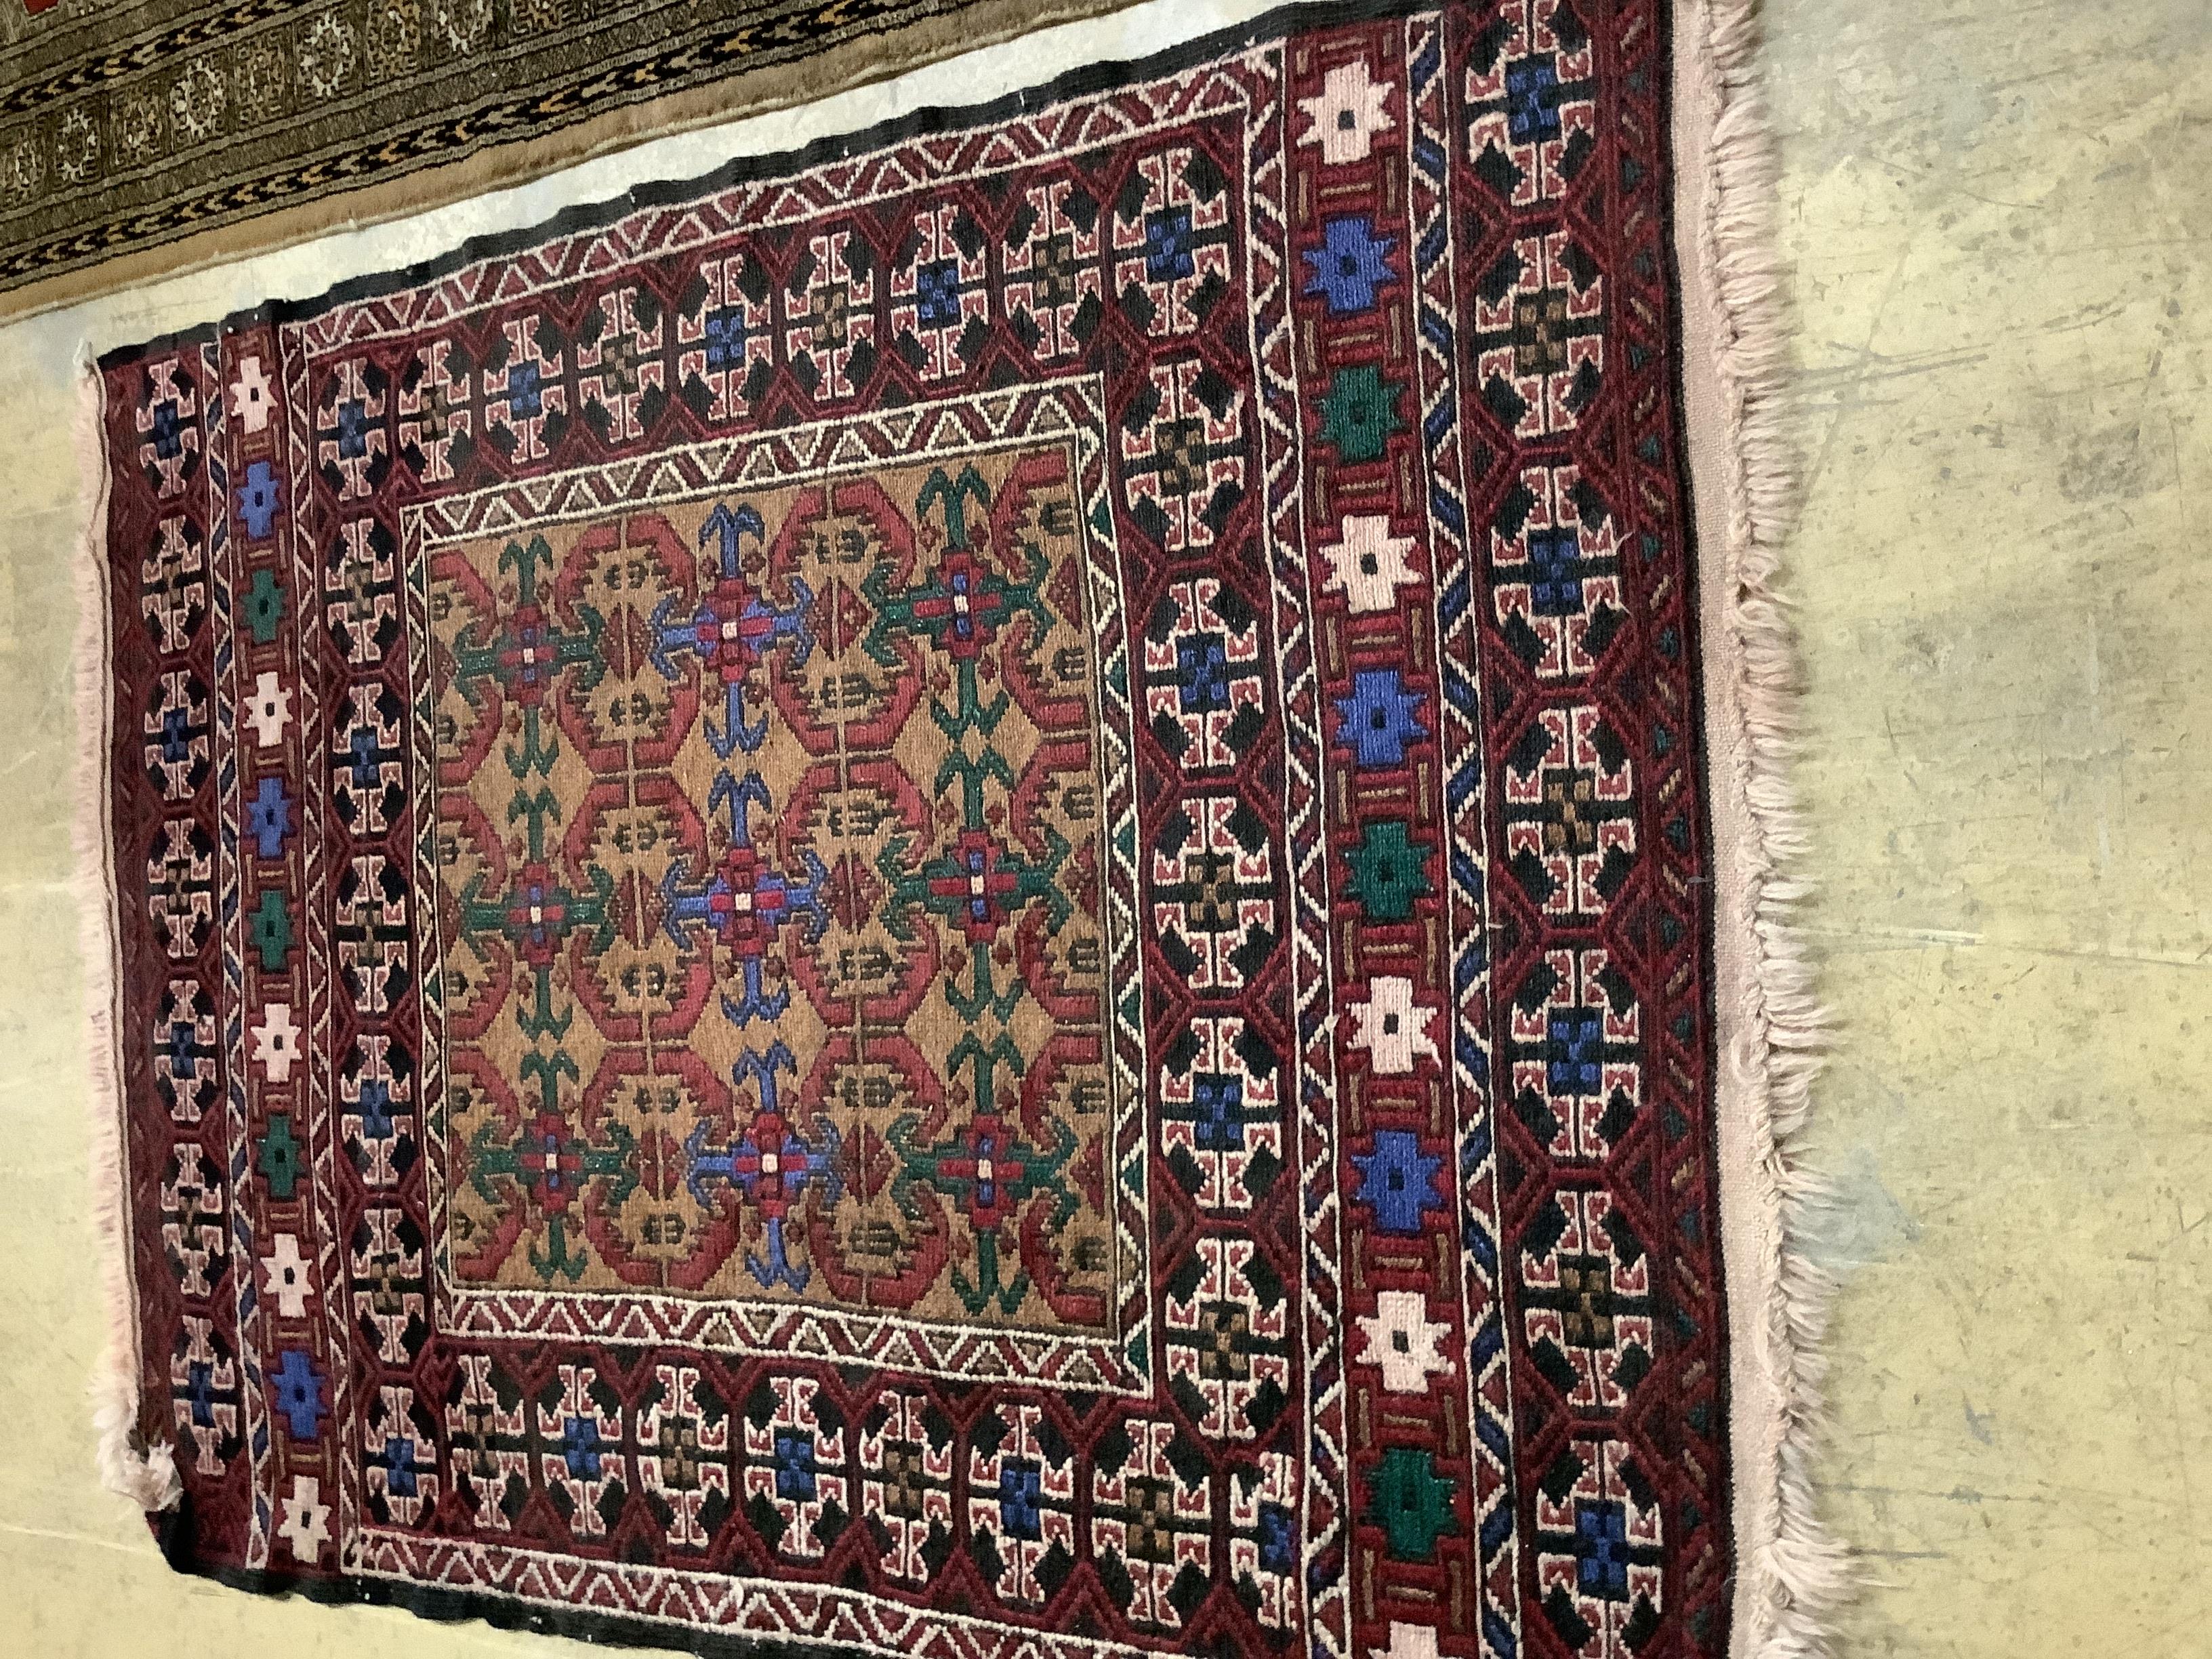 Two Bokhara rugs and a Baktiari Kilim rug, largest 160 x 98cm